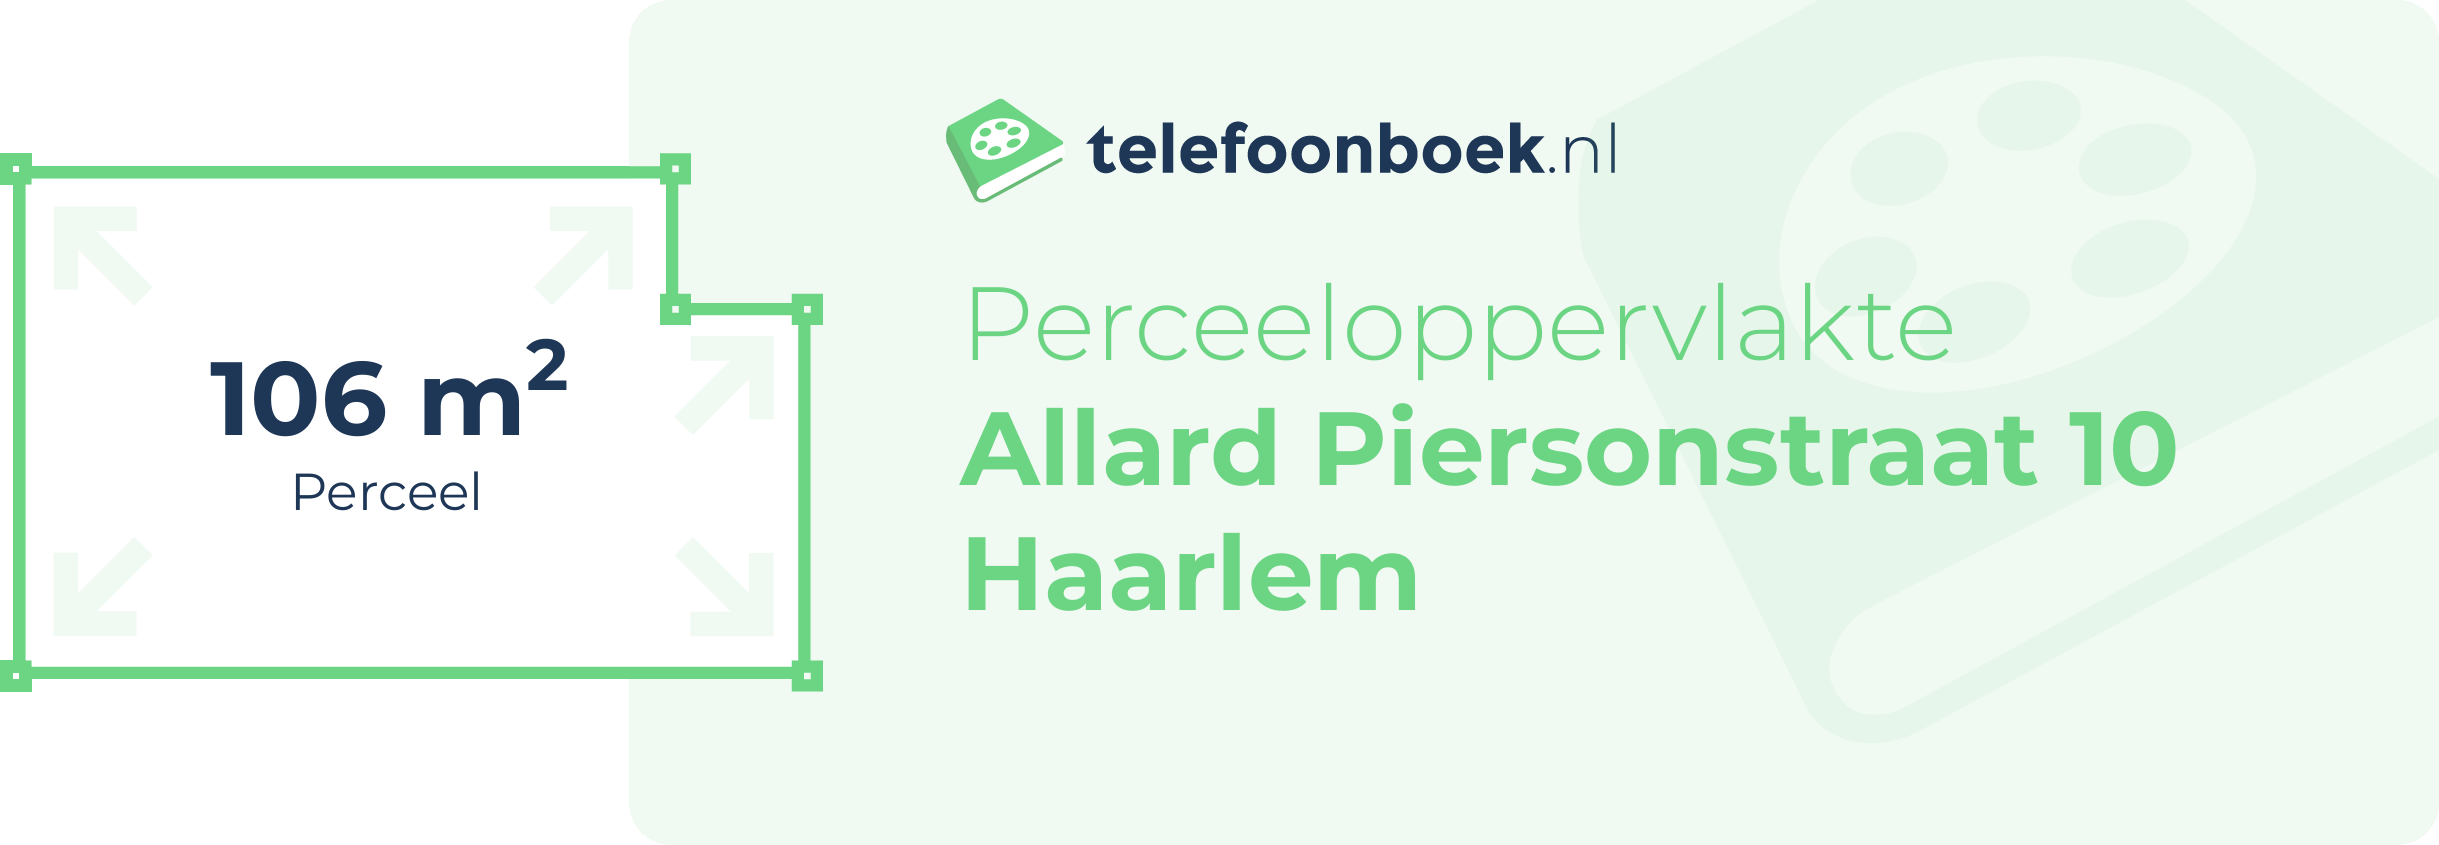 Perceeloppervlakte Allard Piersonstraat 10 Haarlem